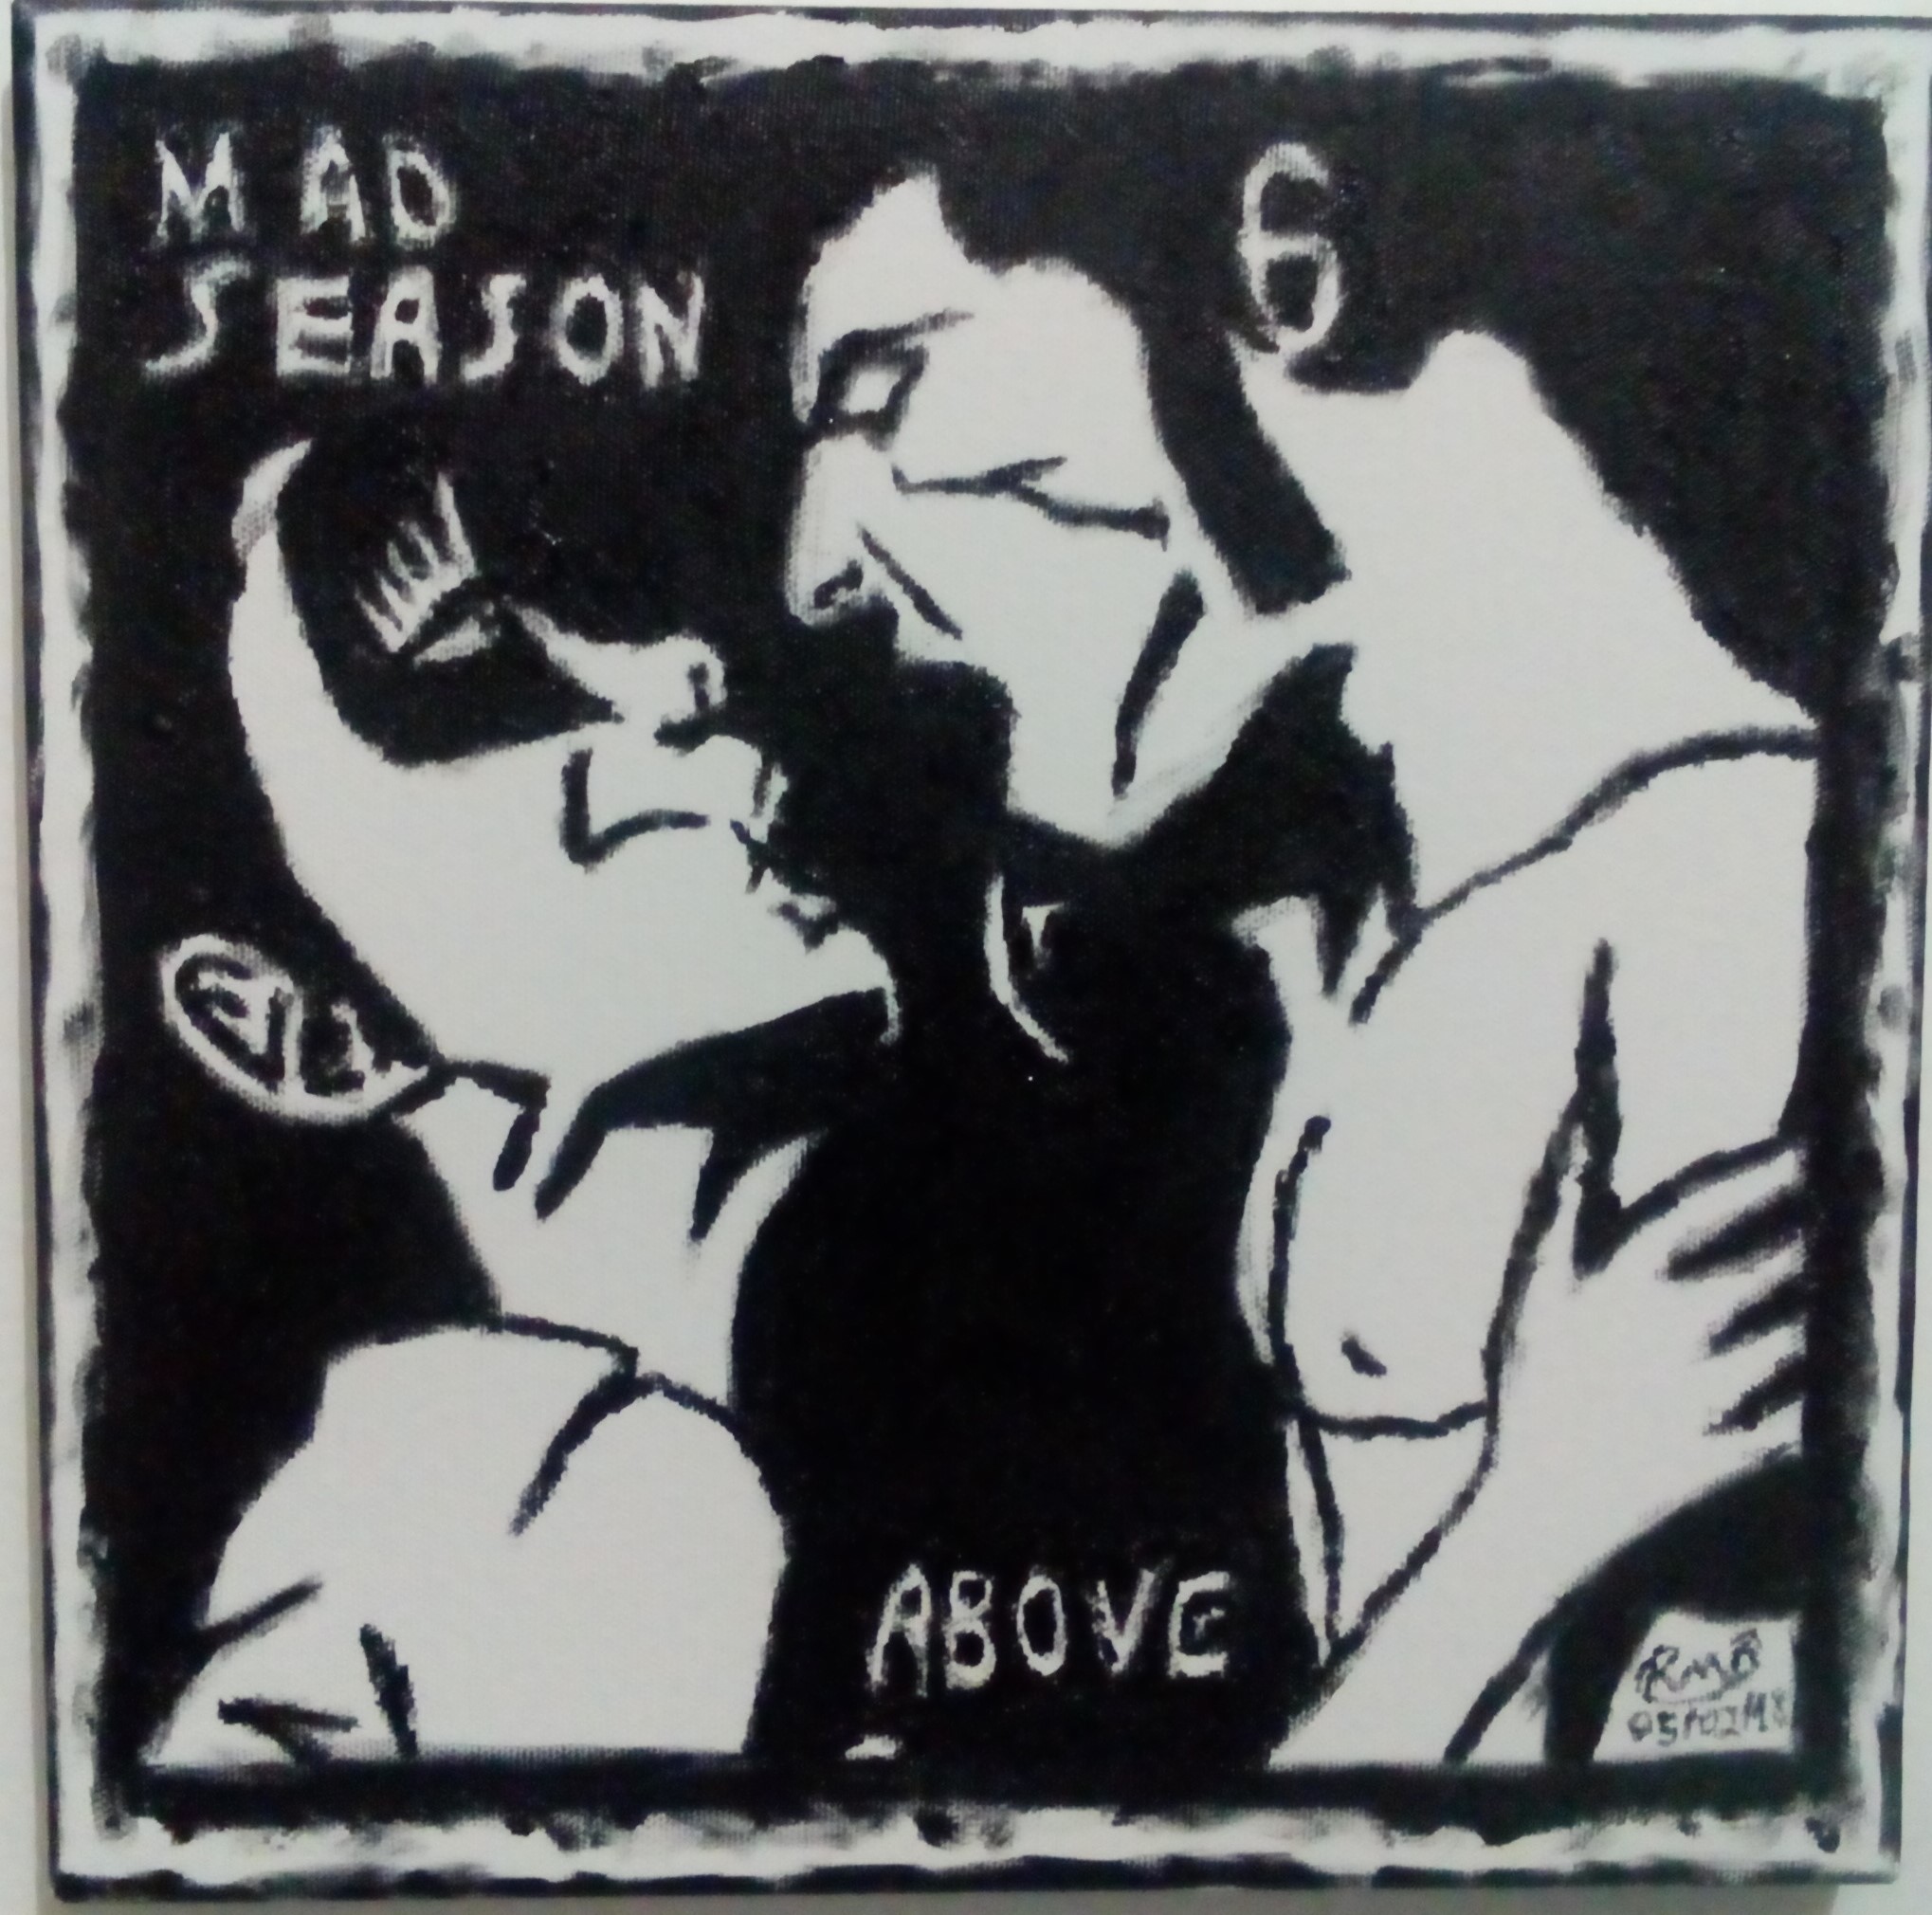 Mad Season Capa - 30X30cm (2018) - Tinta óleo.